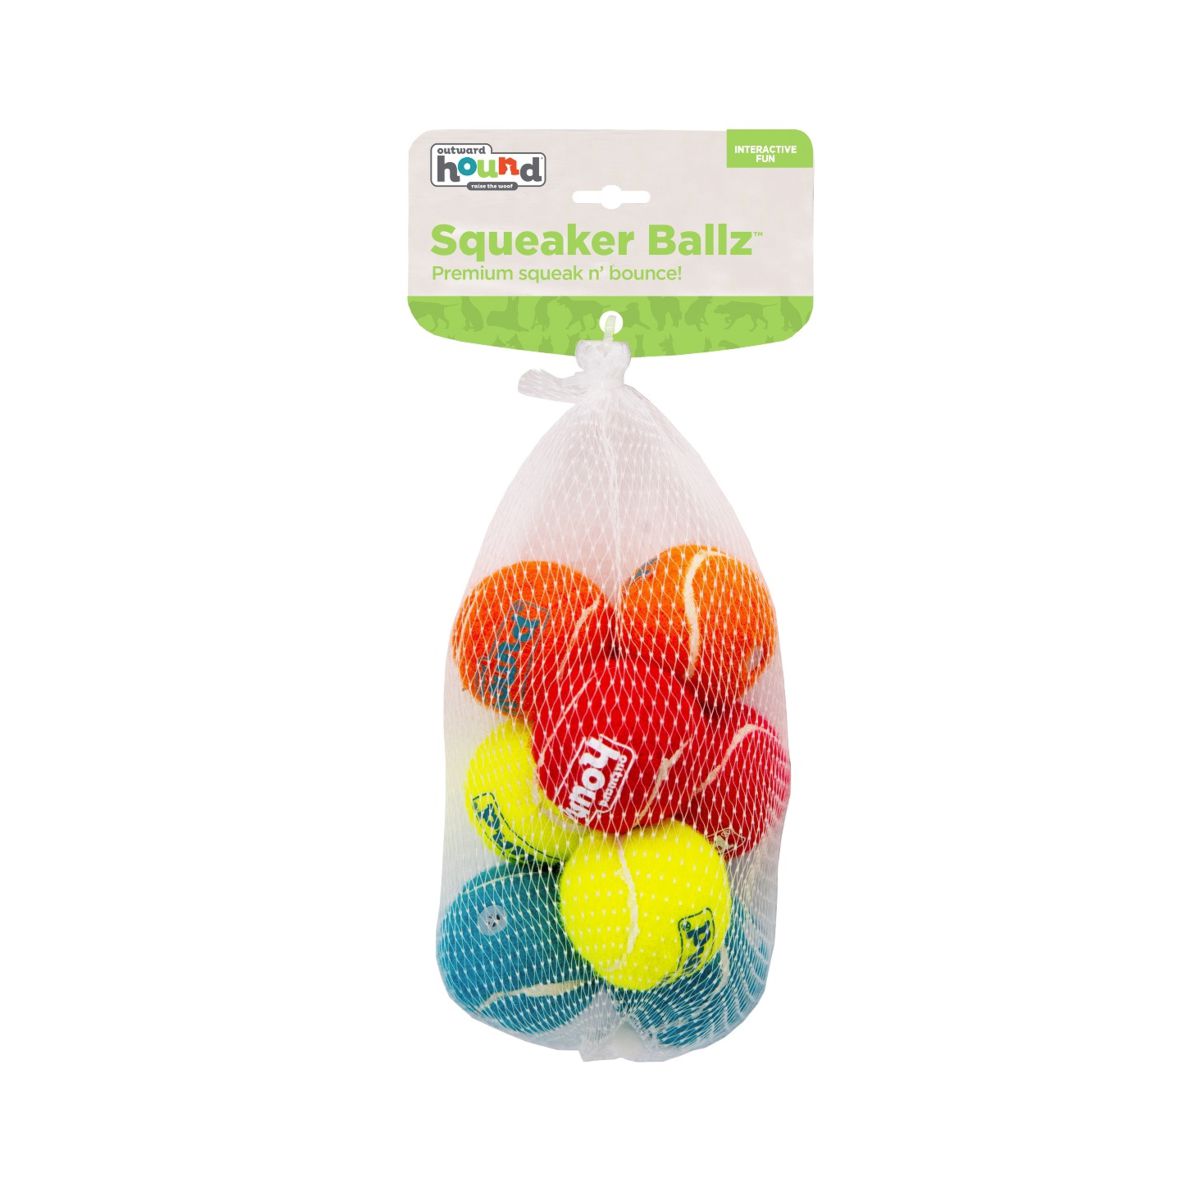 Squeaker Ballz X-Small | Pawlicious & Company